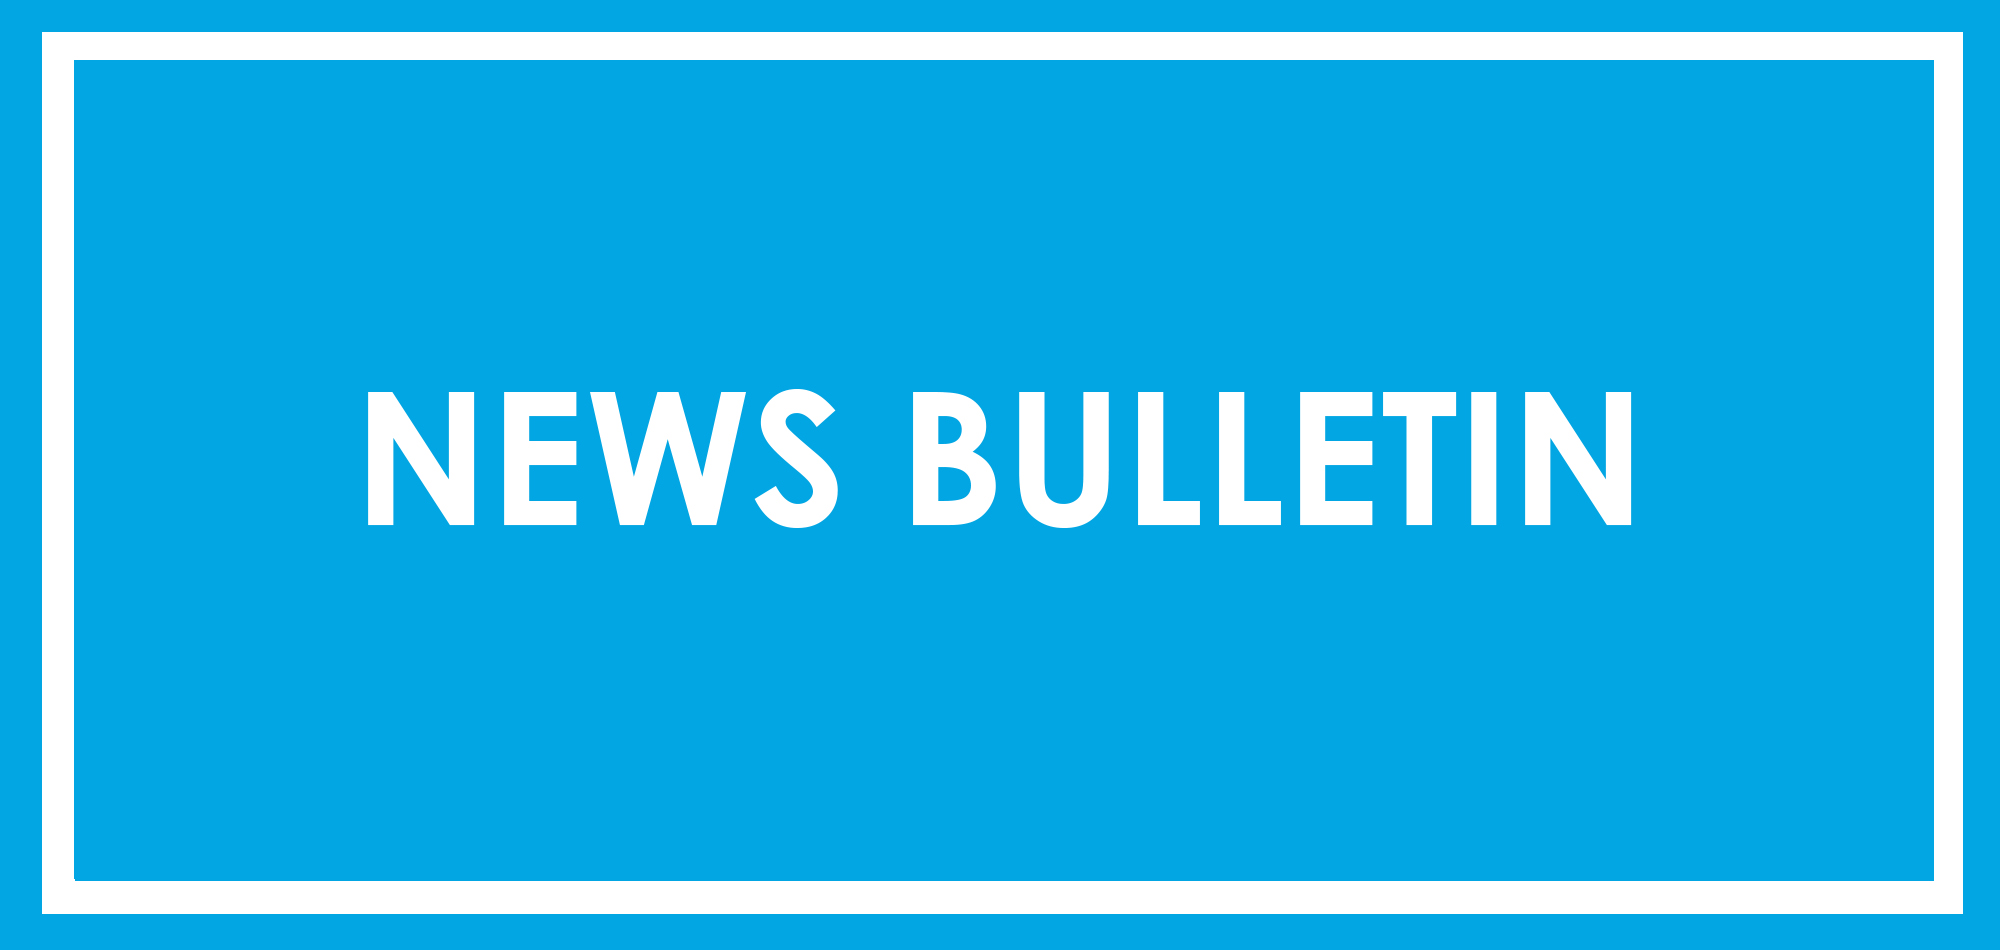 News Bulletin - 08.09.20